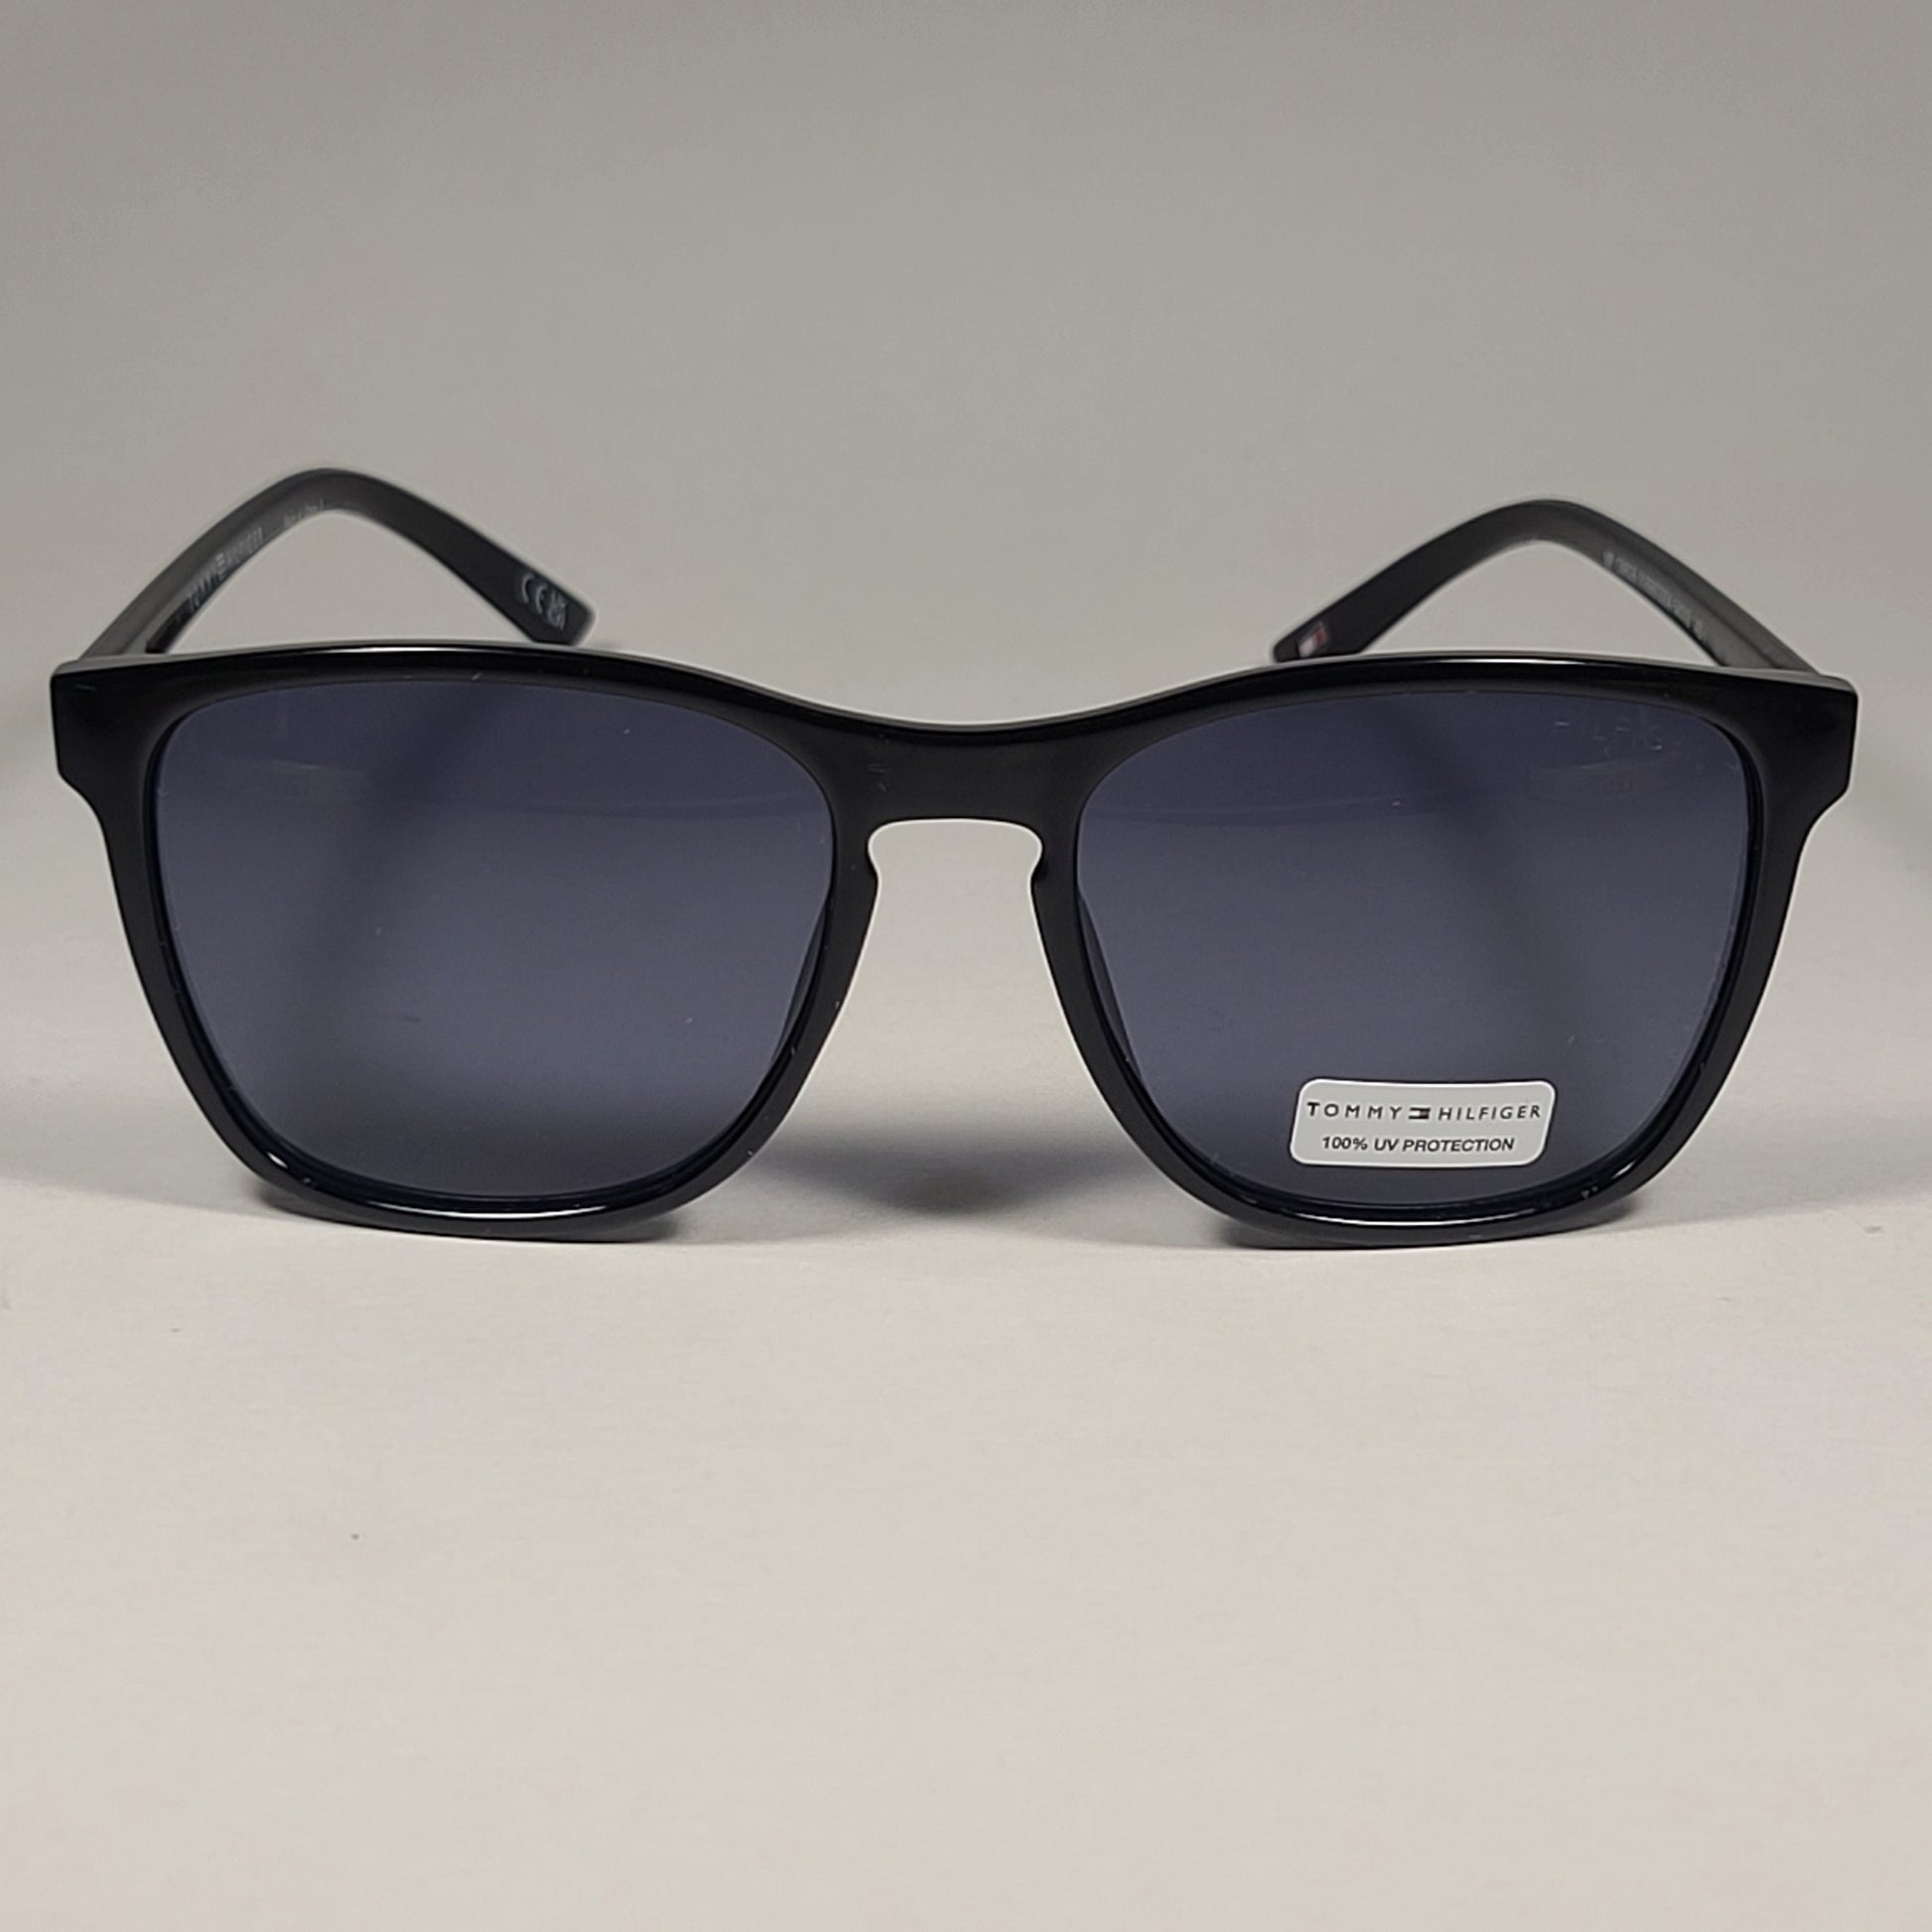 Tommy Hilfiger Moro MP OM626 Keyhole Sunglasses Black Frame Gray Lens - Sunglasses